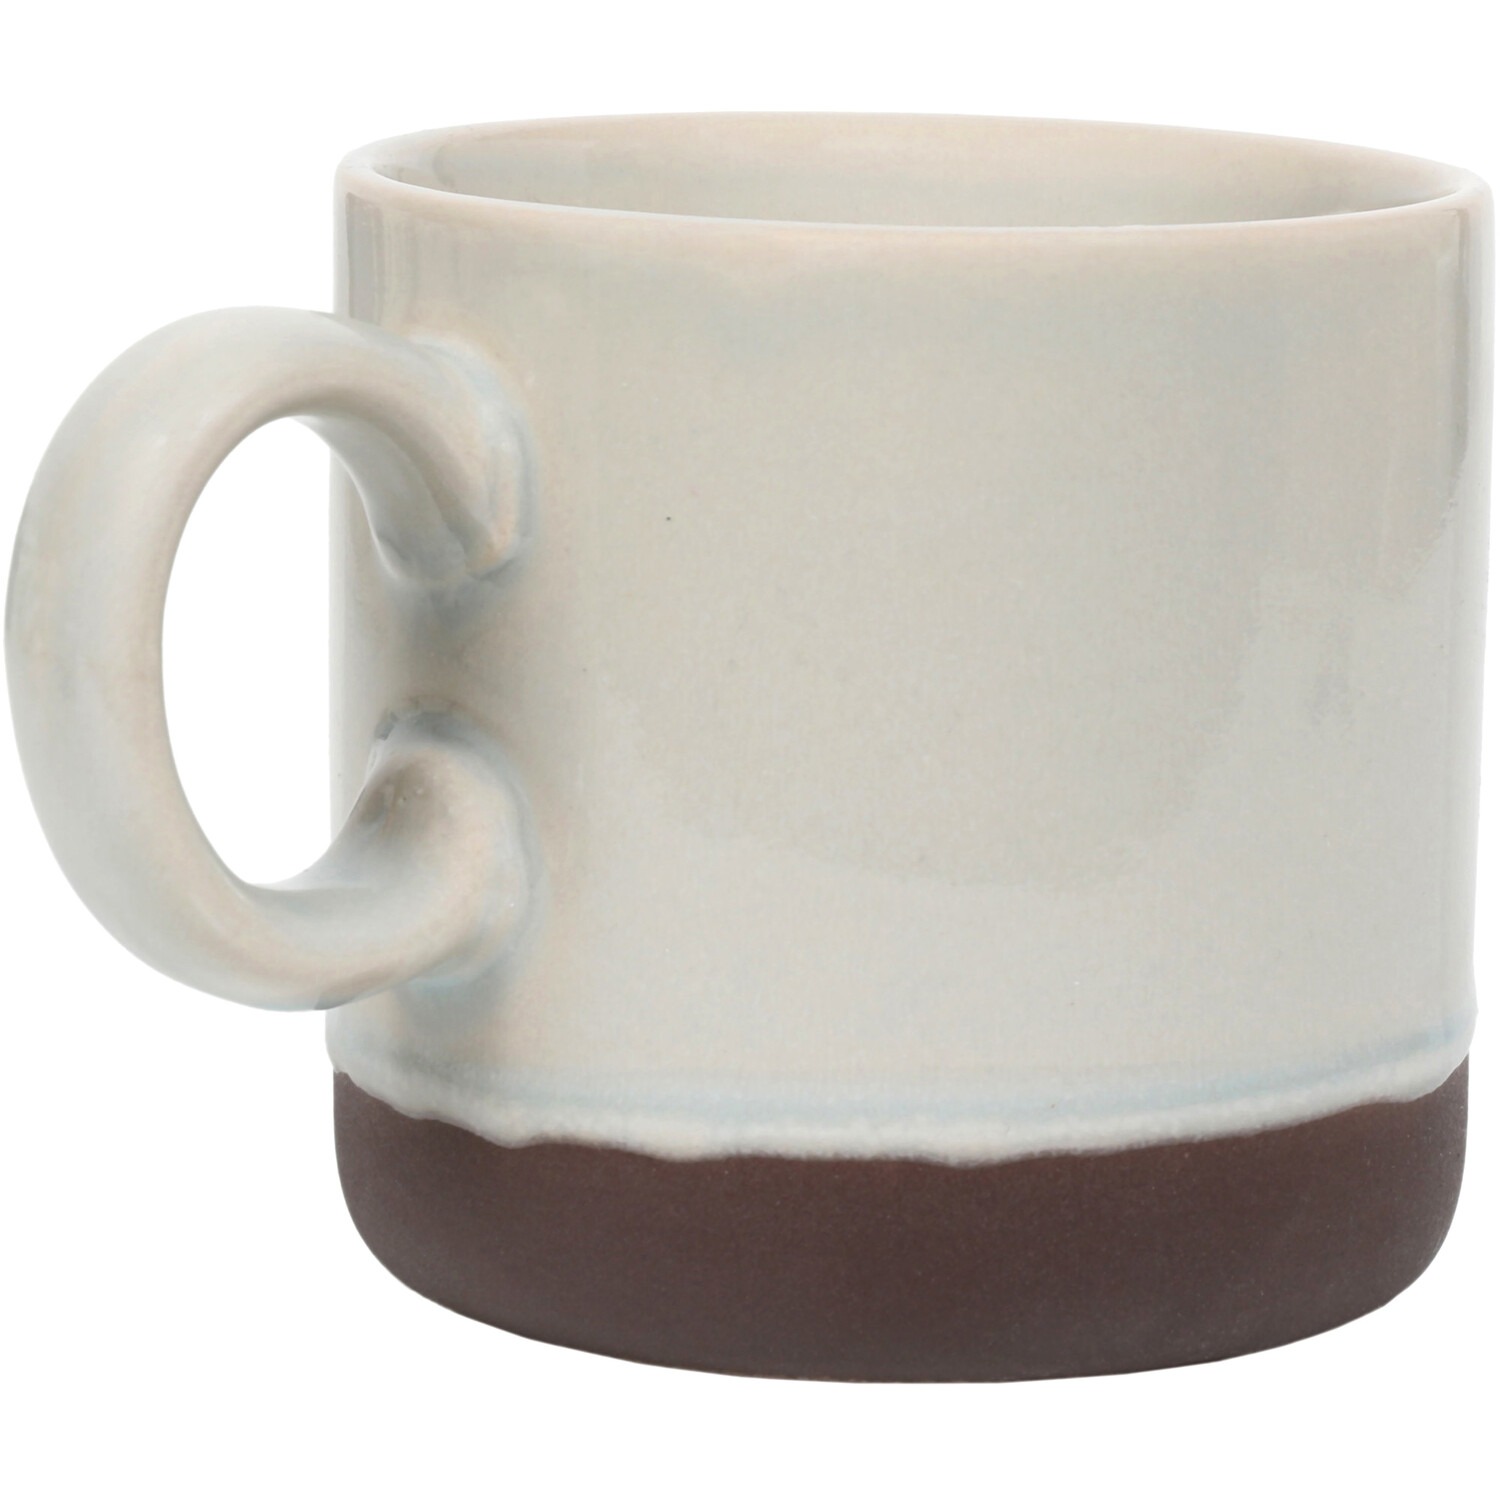 Single Reactive Glaze Mug in Assorted styles Image 2